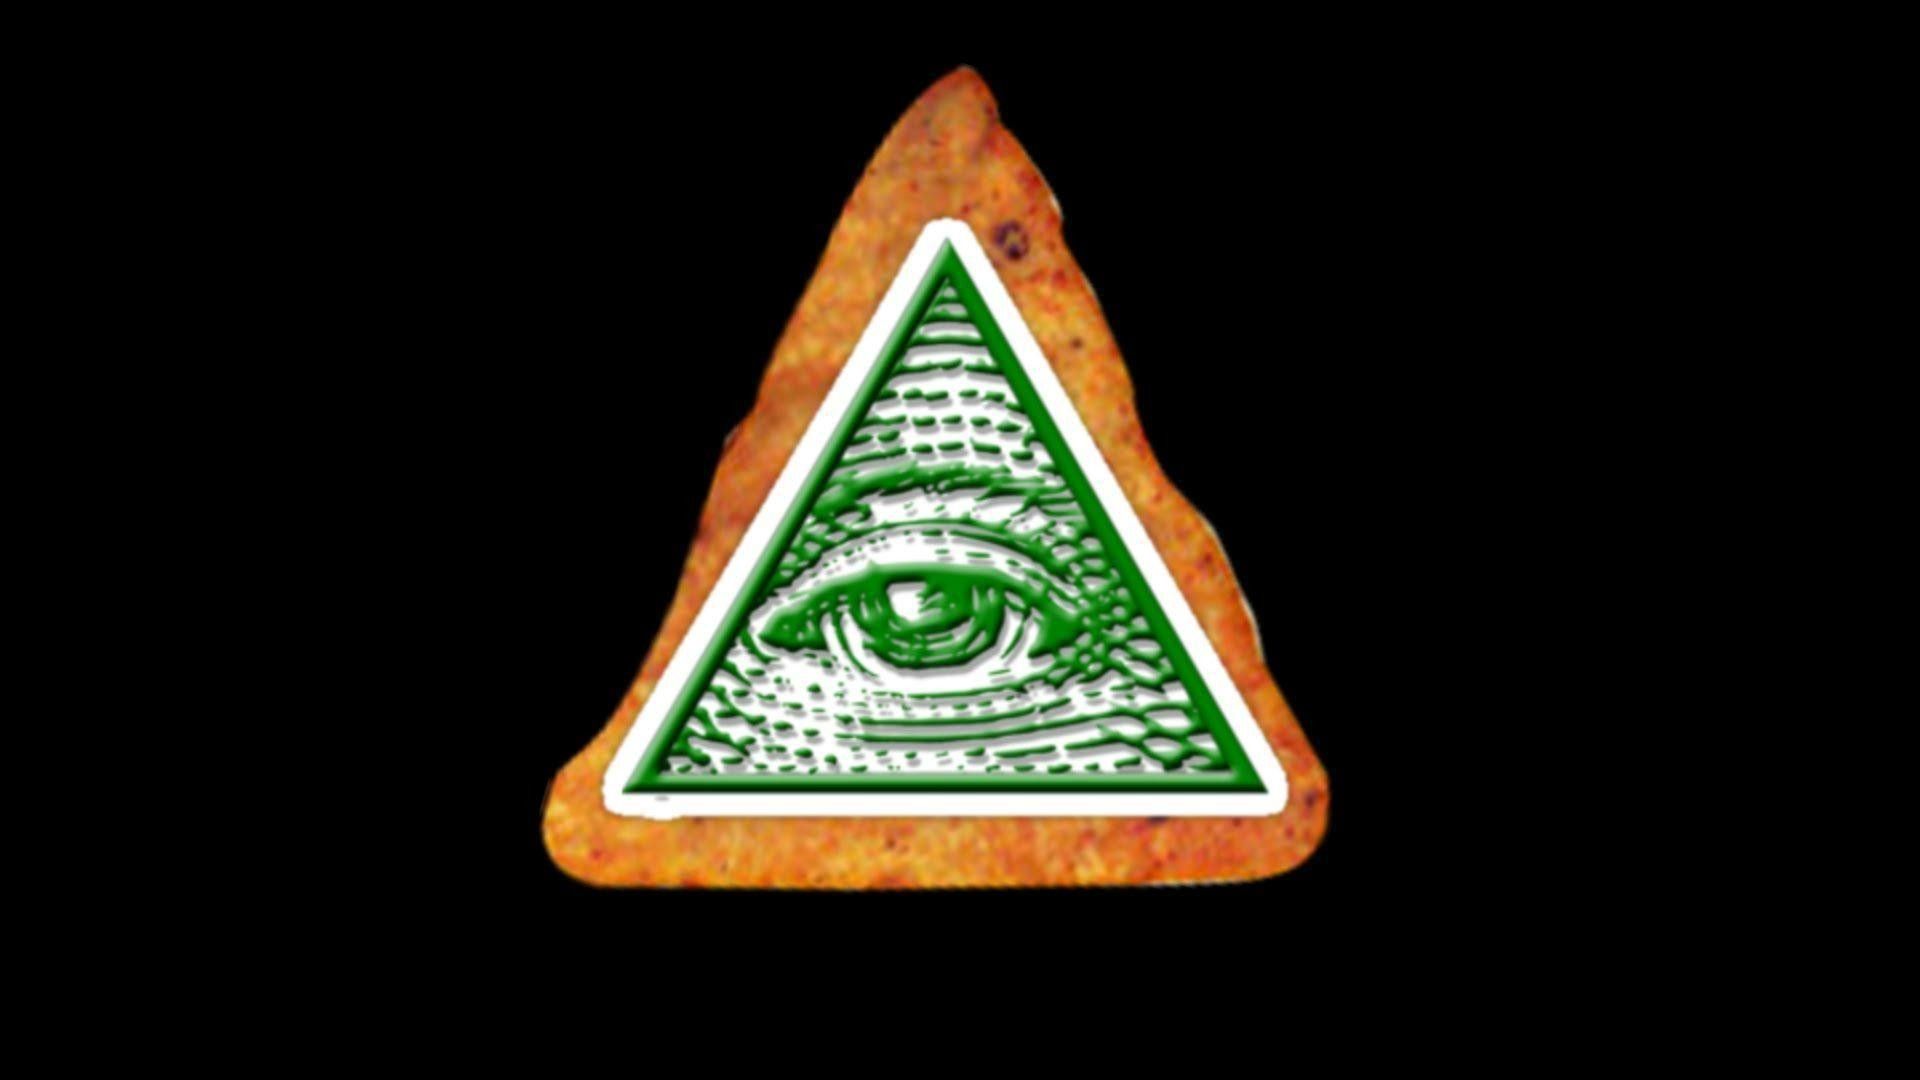 The all seeing eye is a symbol of the Illuminati - Doritos